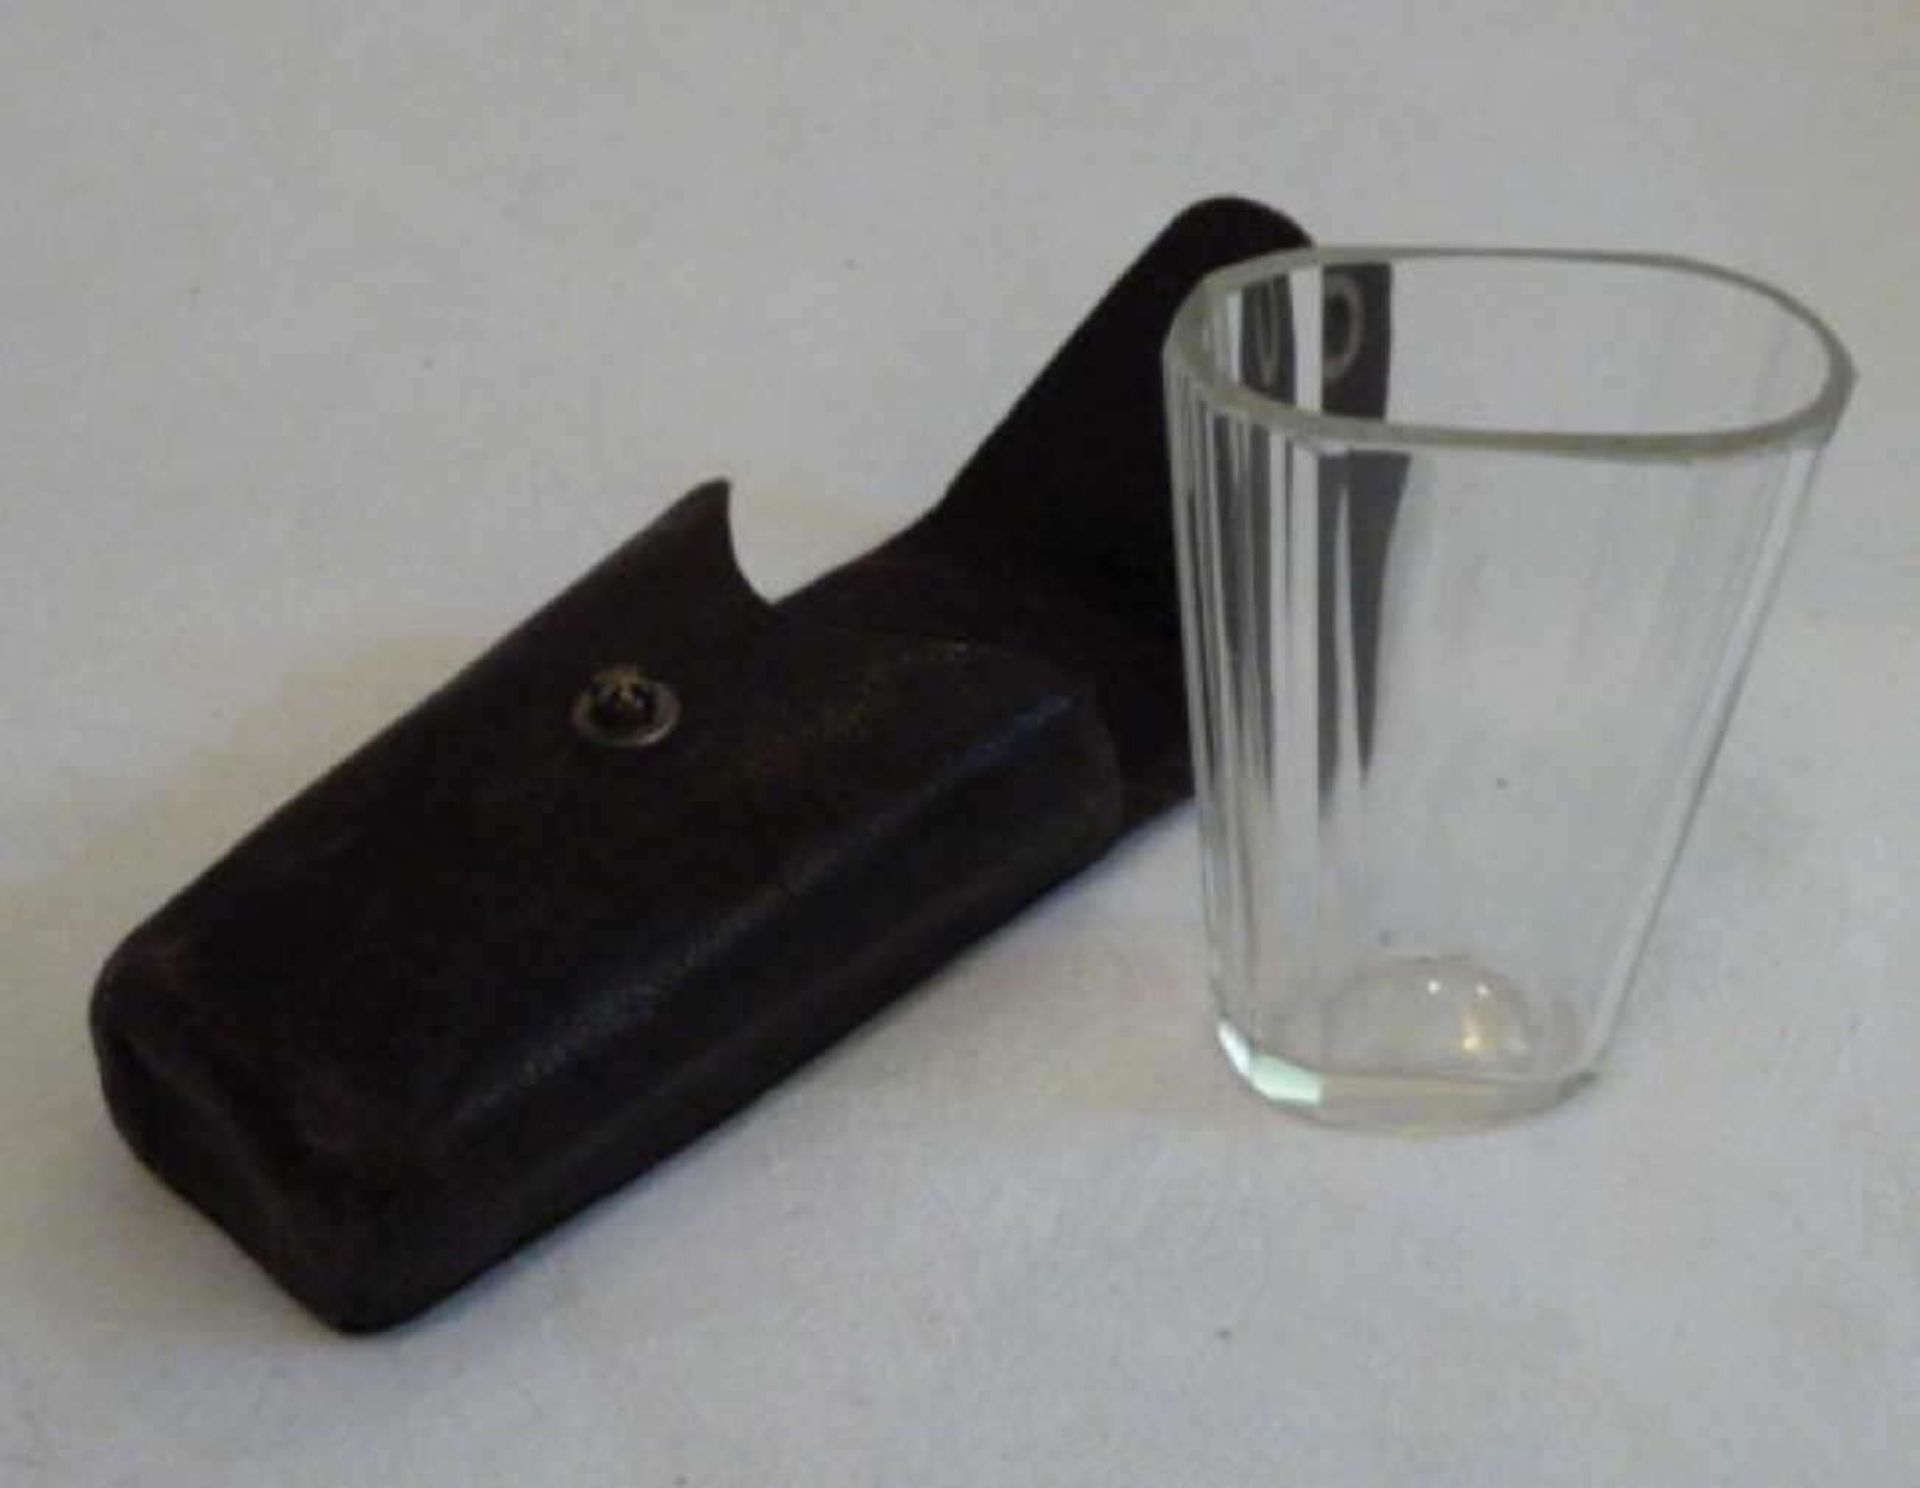 1 Biedermair drinking glass in leather case. Very good condition, height c.a 8,5cm - Bild 2 aus 2